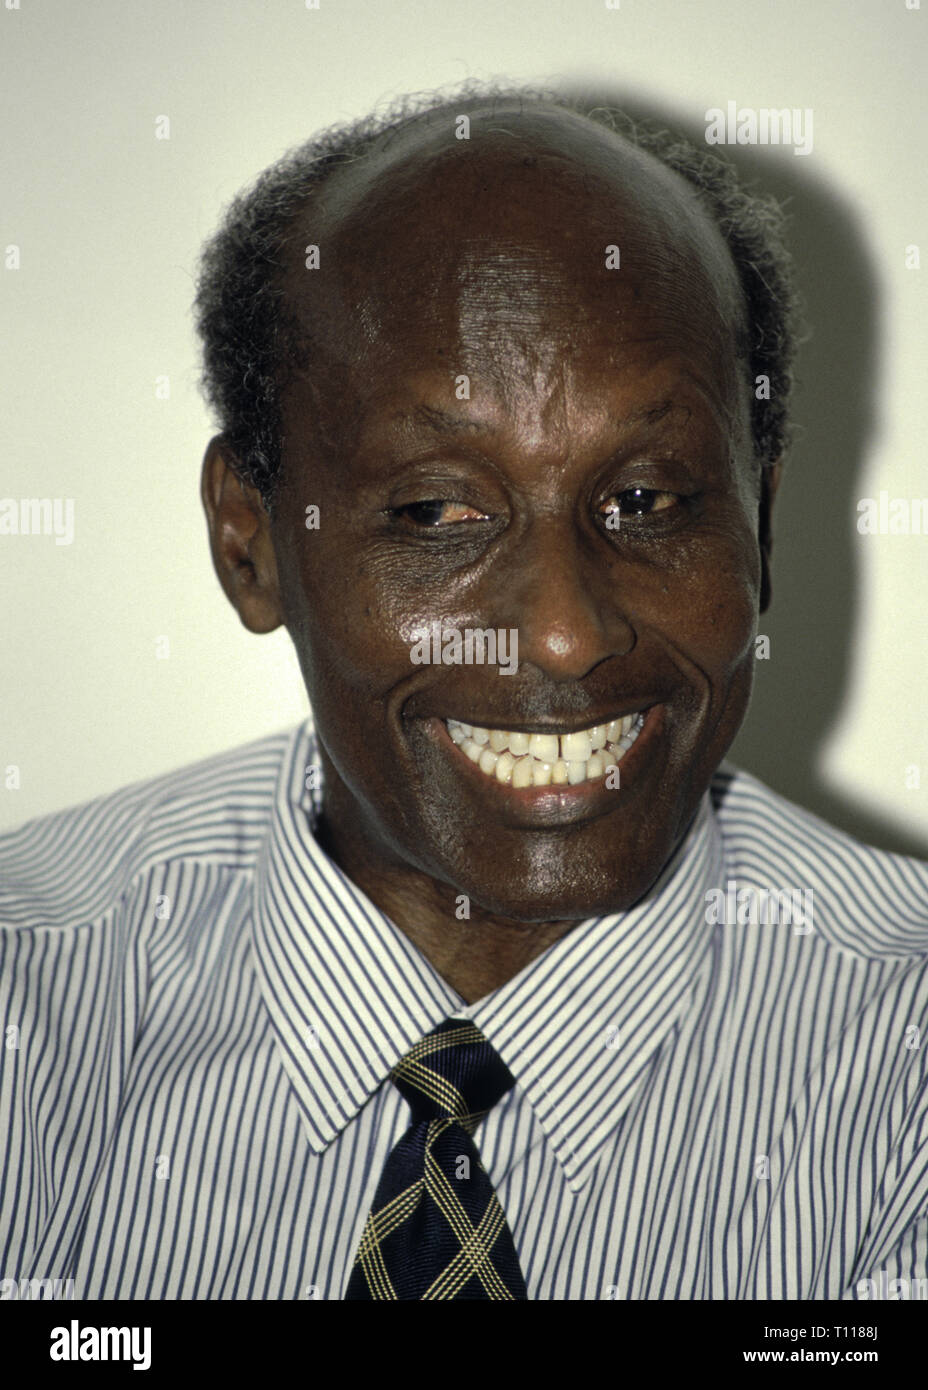 27th-october-1993-general-mohamed-farah-aidid-giving-an-impromptu-press-conference-to-the-international-media-in-mogadishu-somalia-T1188J.jpg